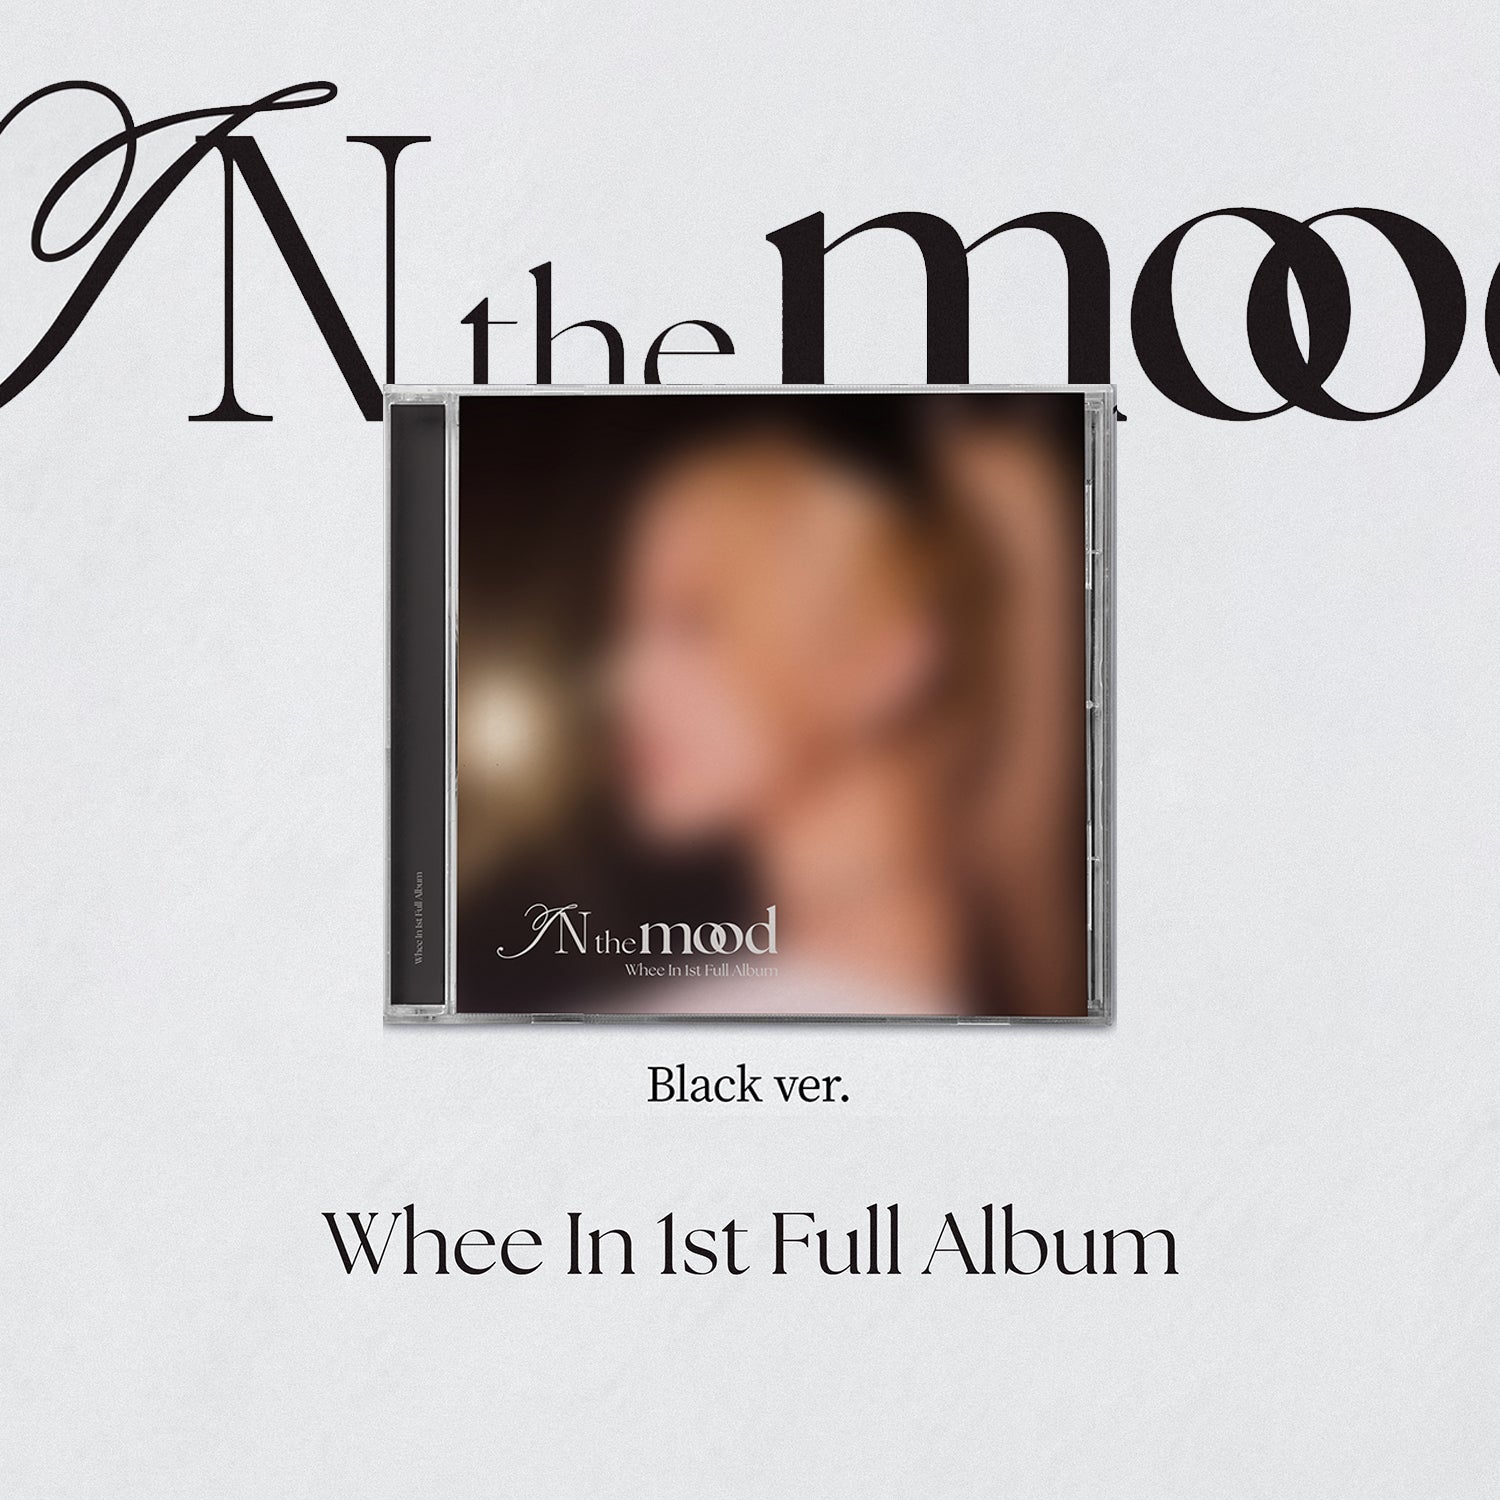 WHEE IN 1ST FULL ALBUM 'IN THE MOOD' (JEWEL) BLACK VERSION COVER